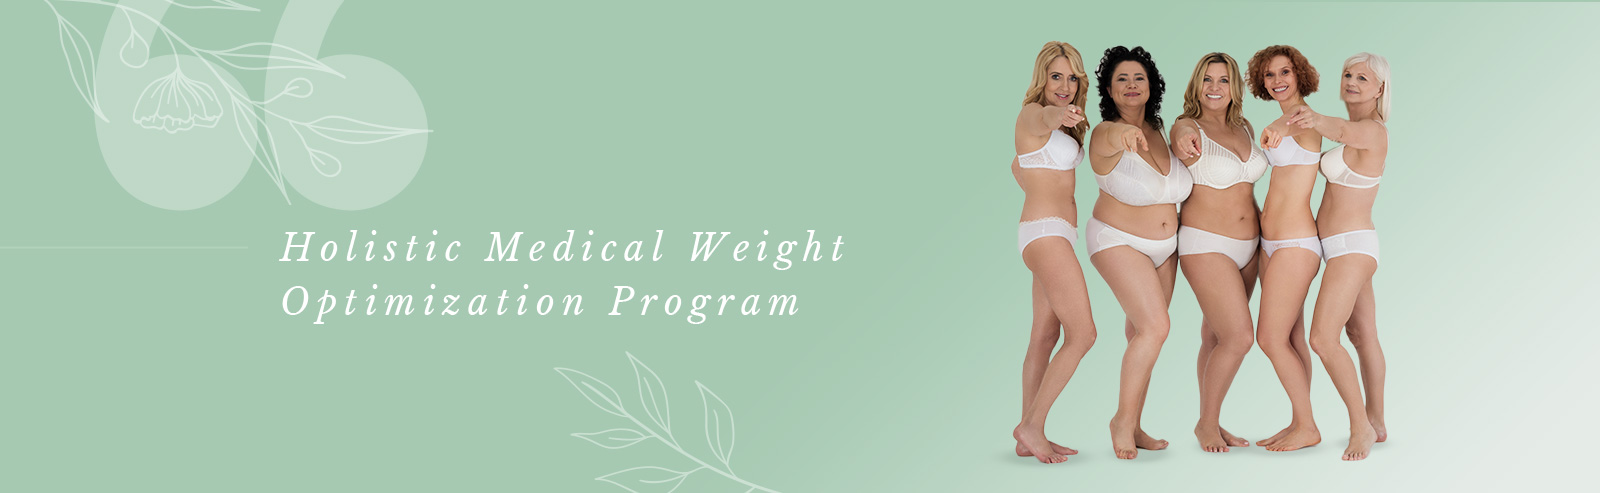 Holistic Medical Weight Optimization Program